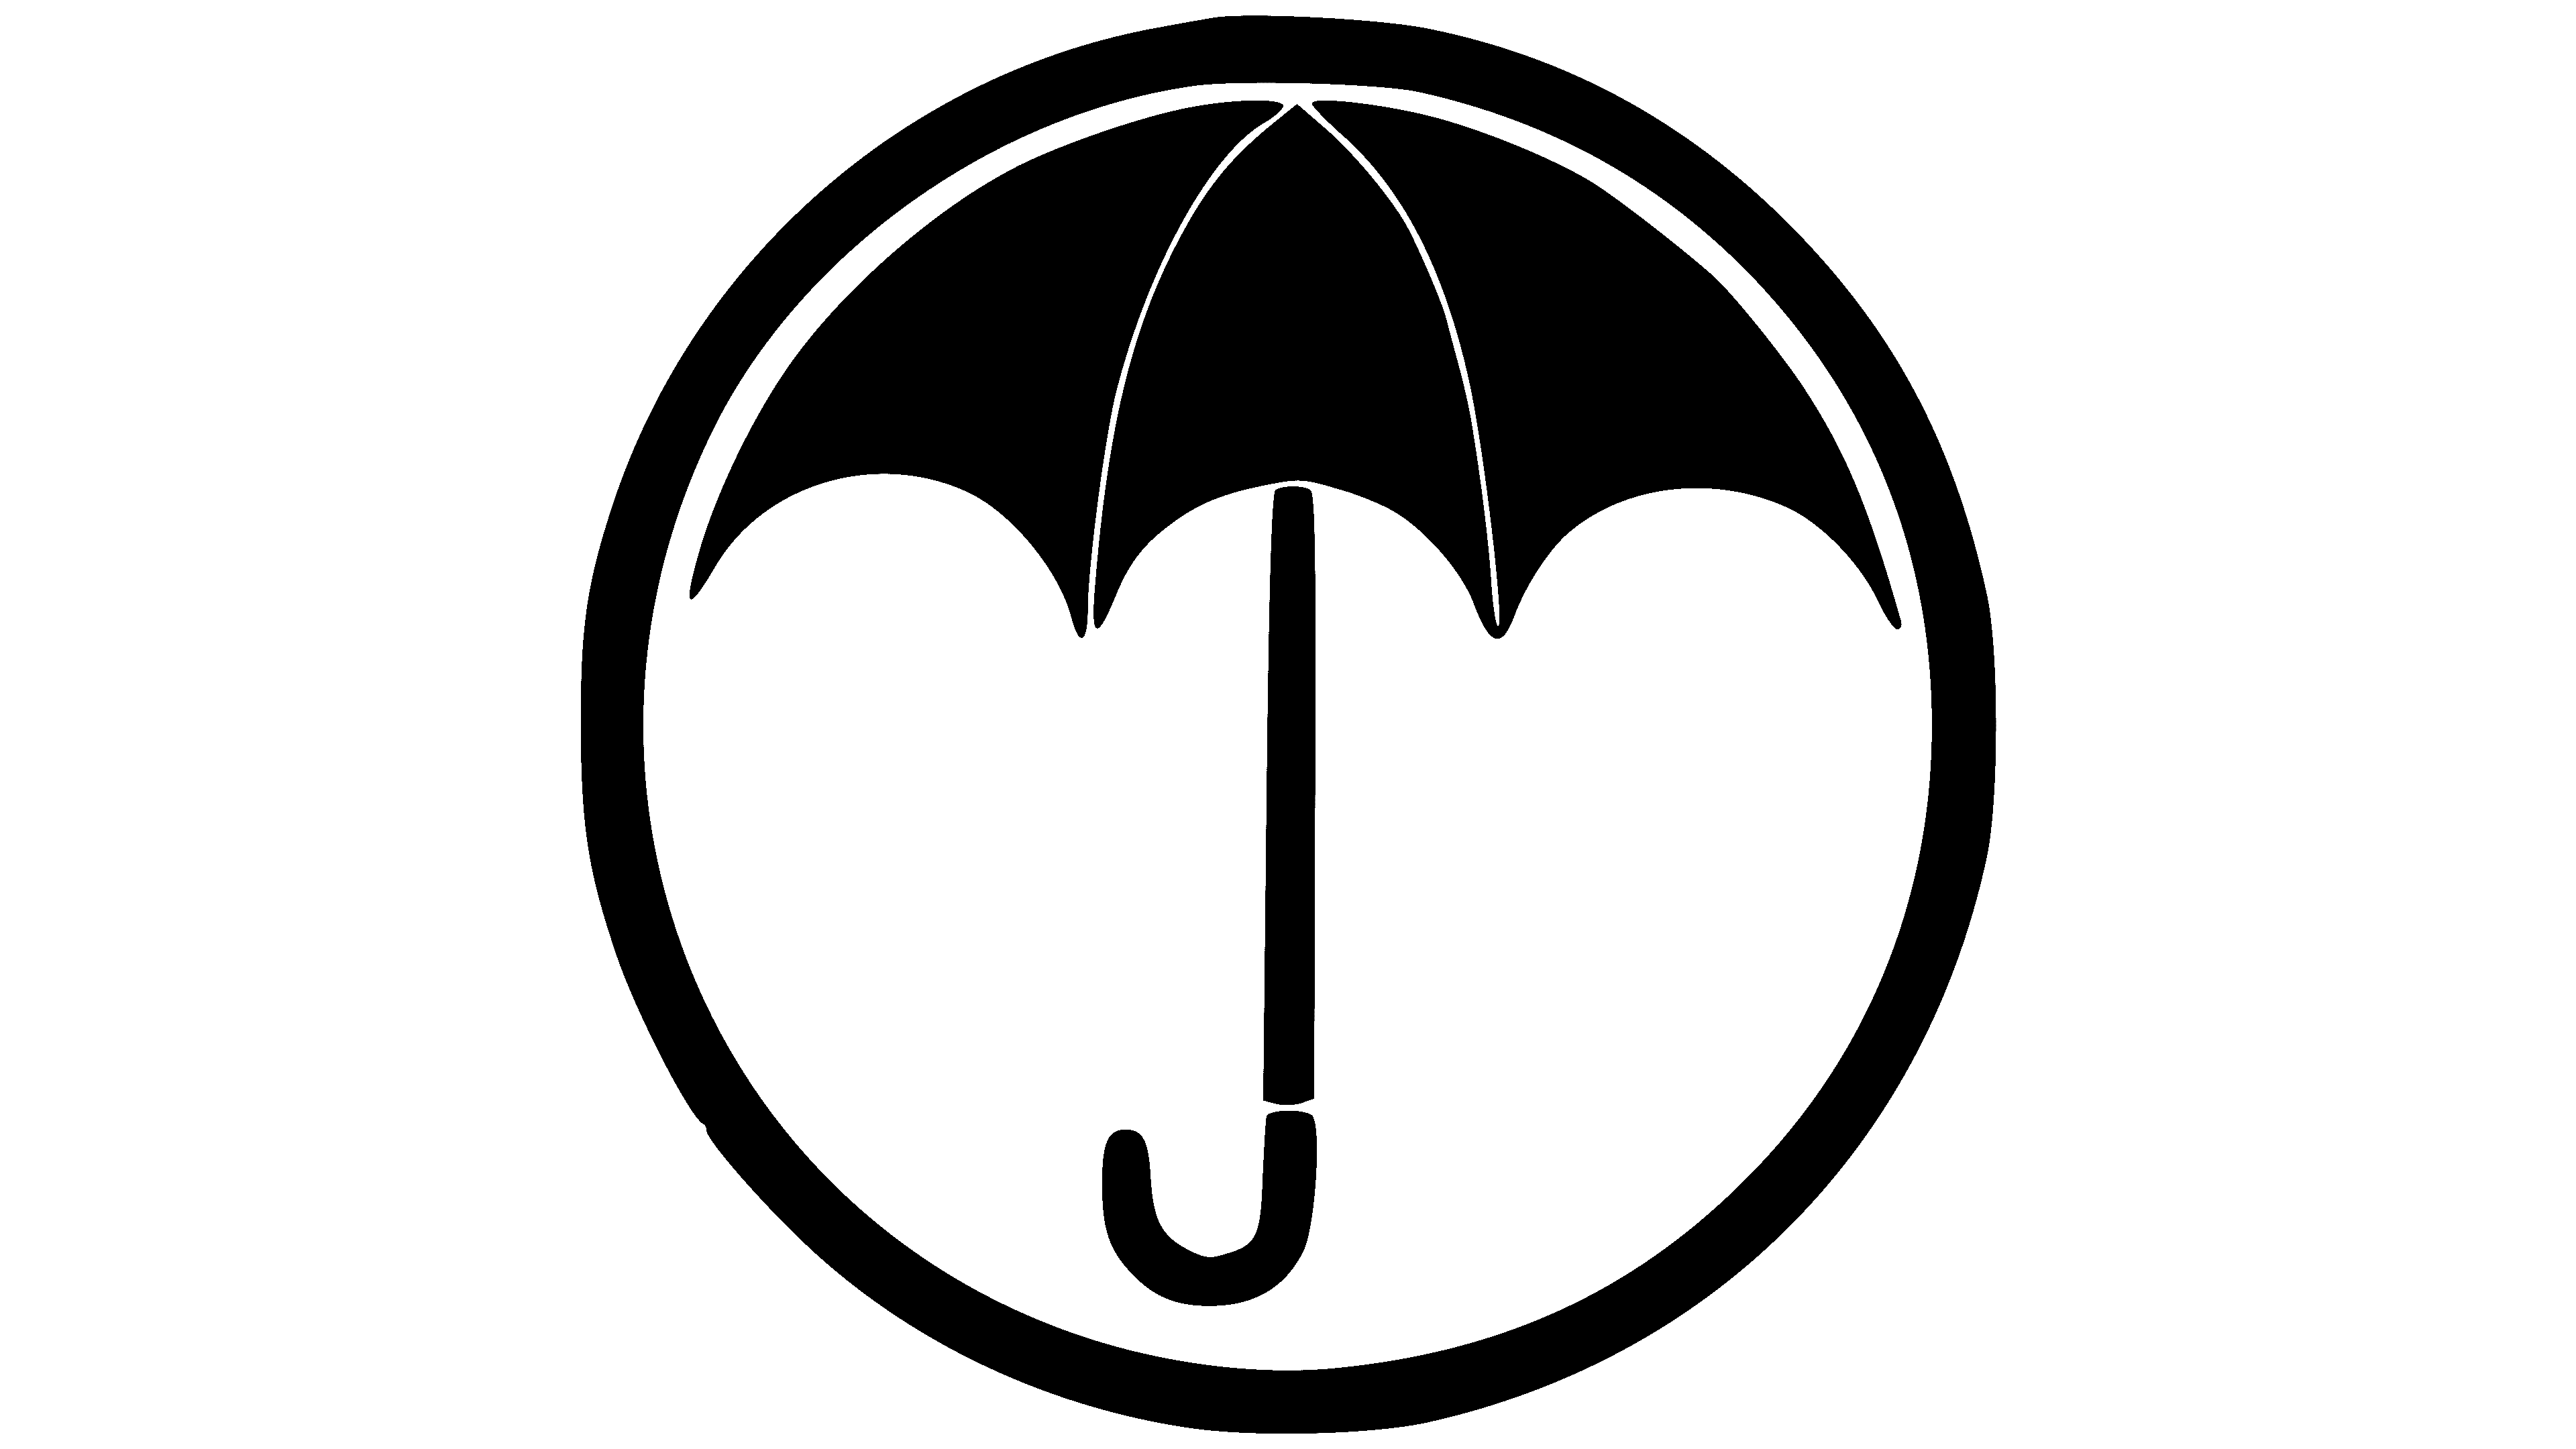 Porte-clés en caoutchouc avec logo The Umbrella Academy 